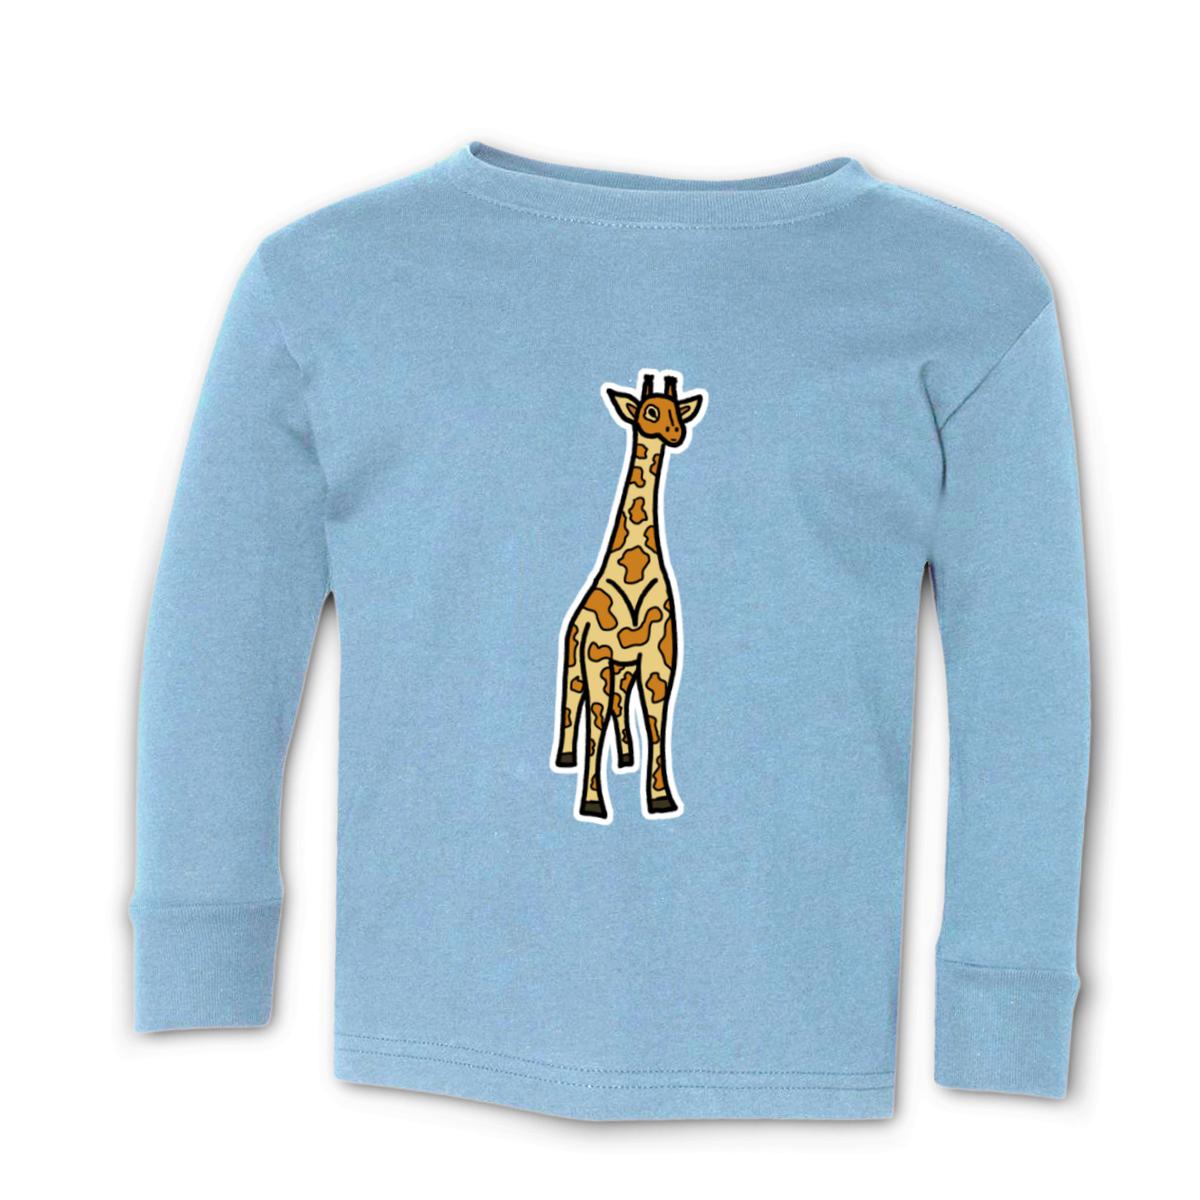 Toy Giraffe Toddler Long Sleeve Tee 2T light-blue